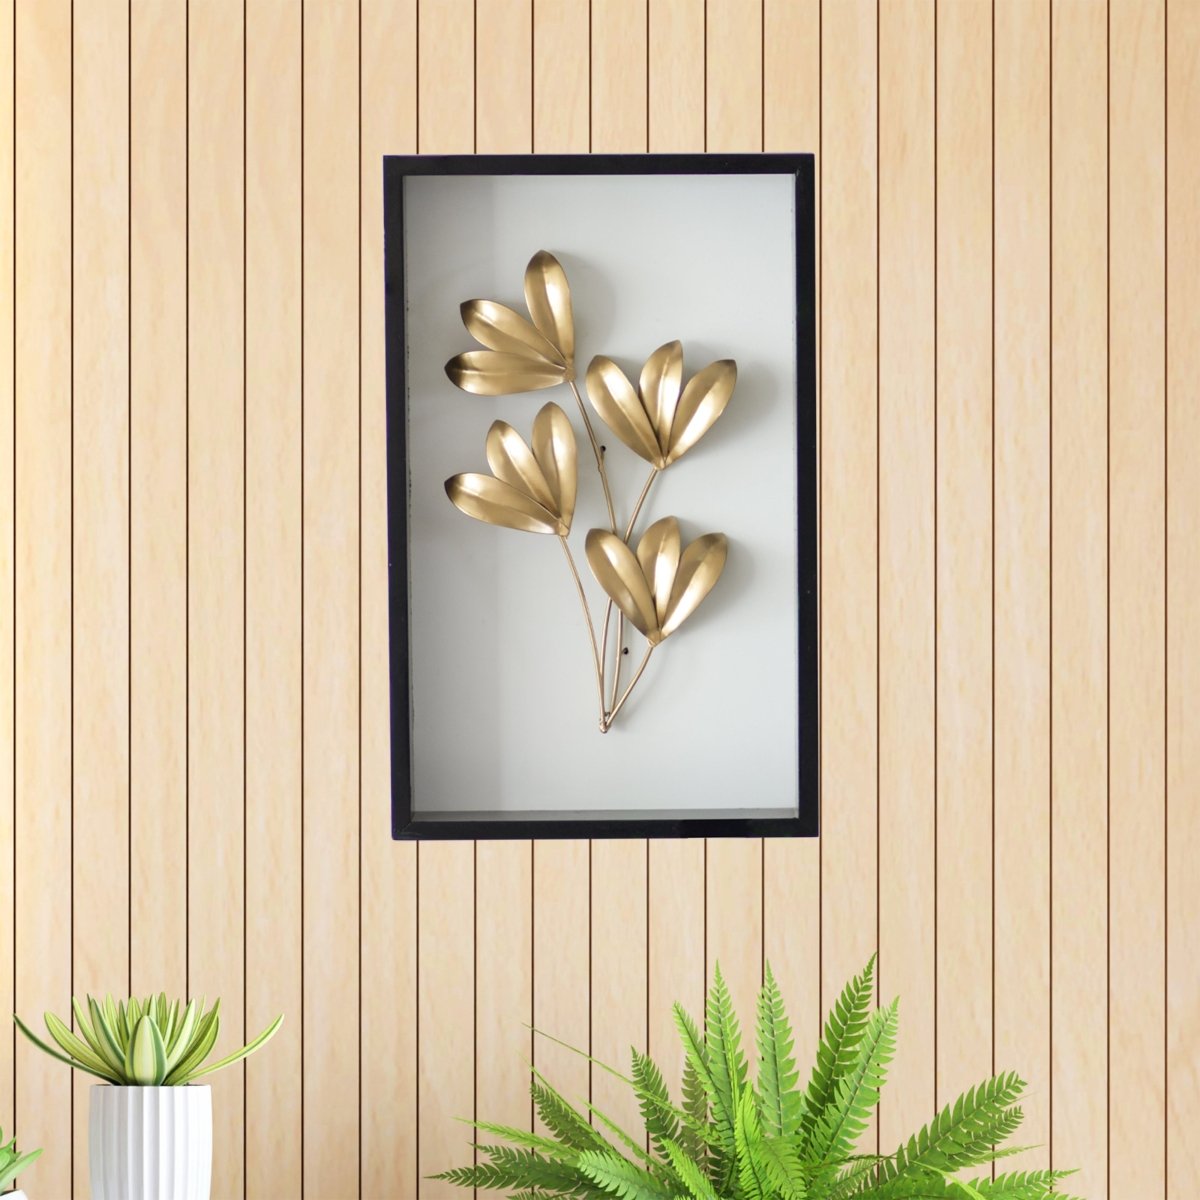 Kezevel Metal Golden Leaf Wall Decor - Handcrafted Rectangle Metal Wall Art, Wall Showpiece for Home Decor, Living Room Decor, Size 25.4X5.08X40.64 CM - Kezevel